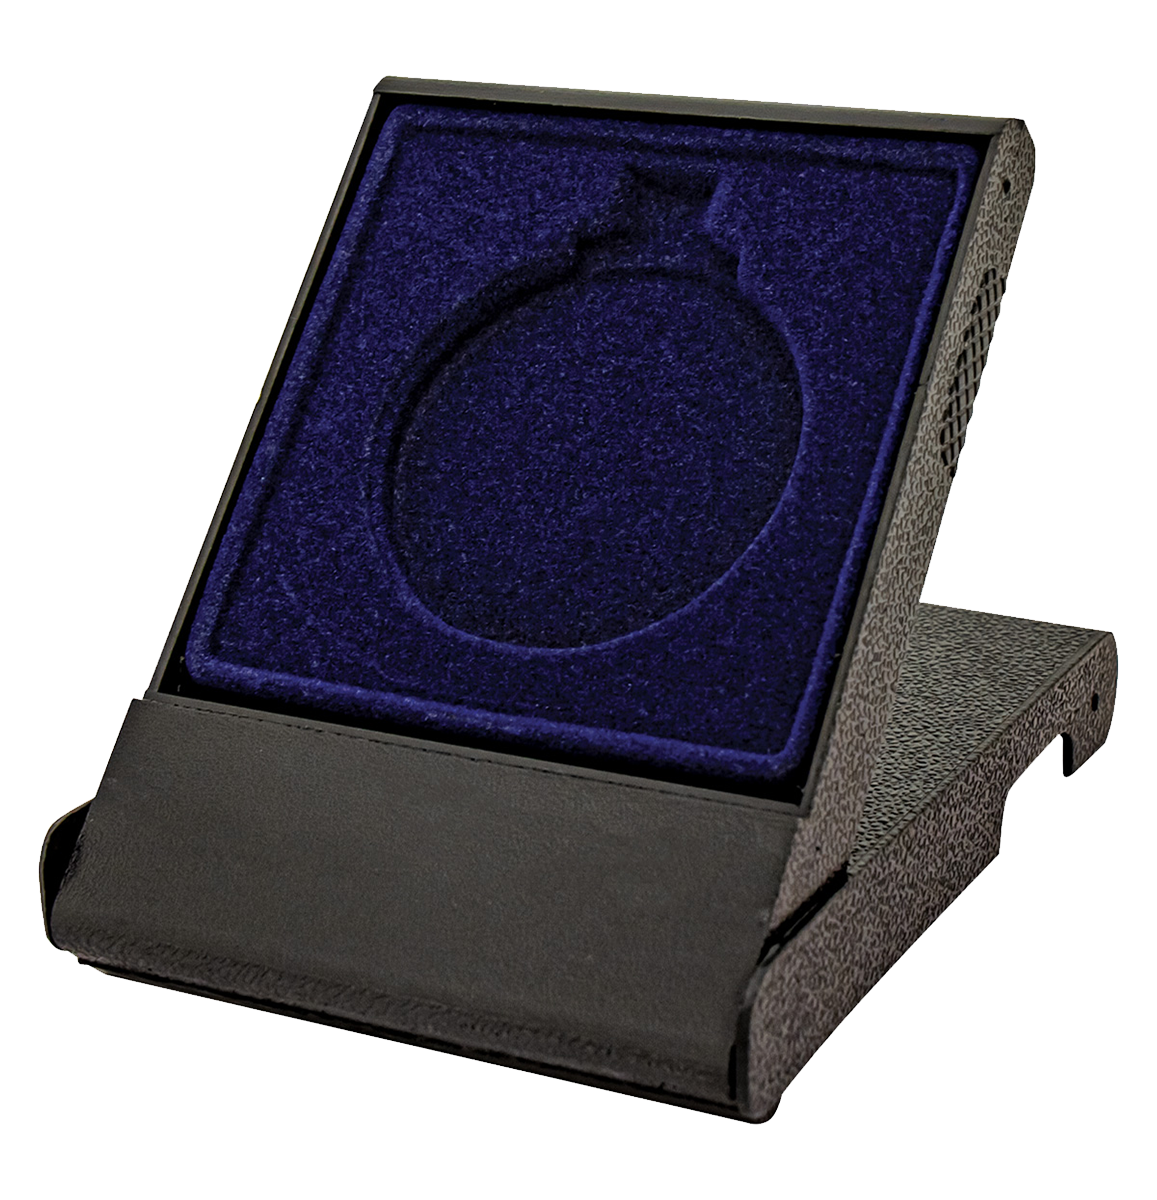 52mm Medal Box